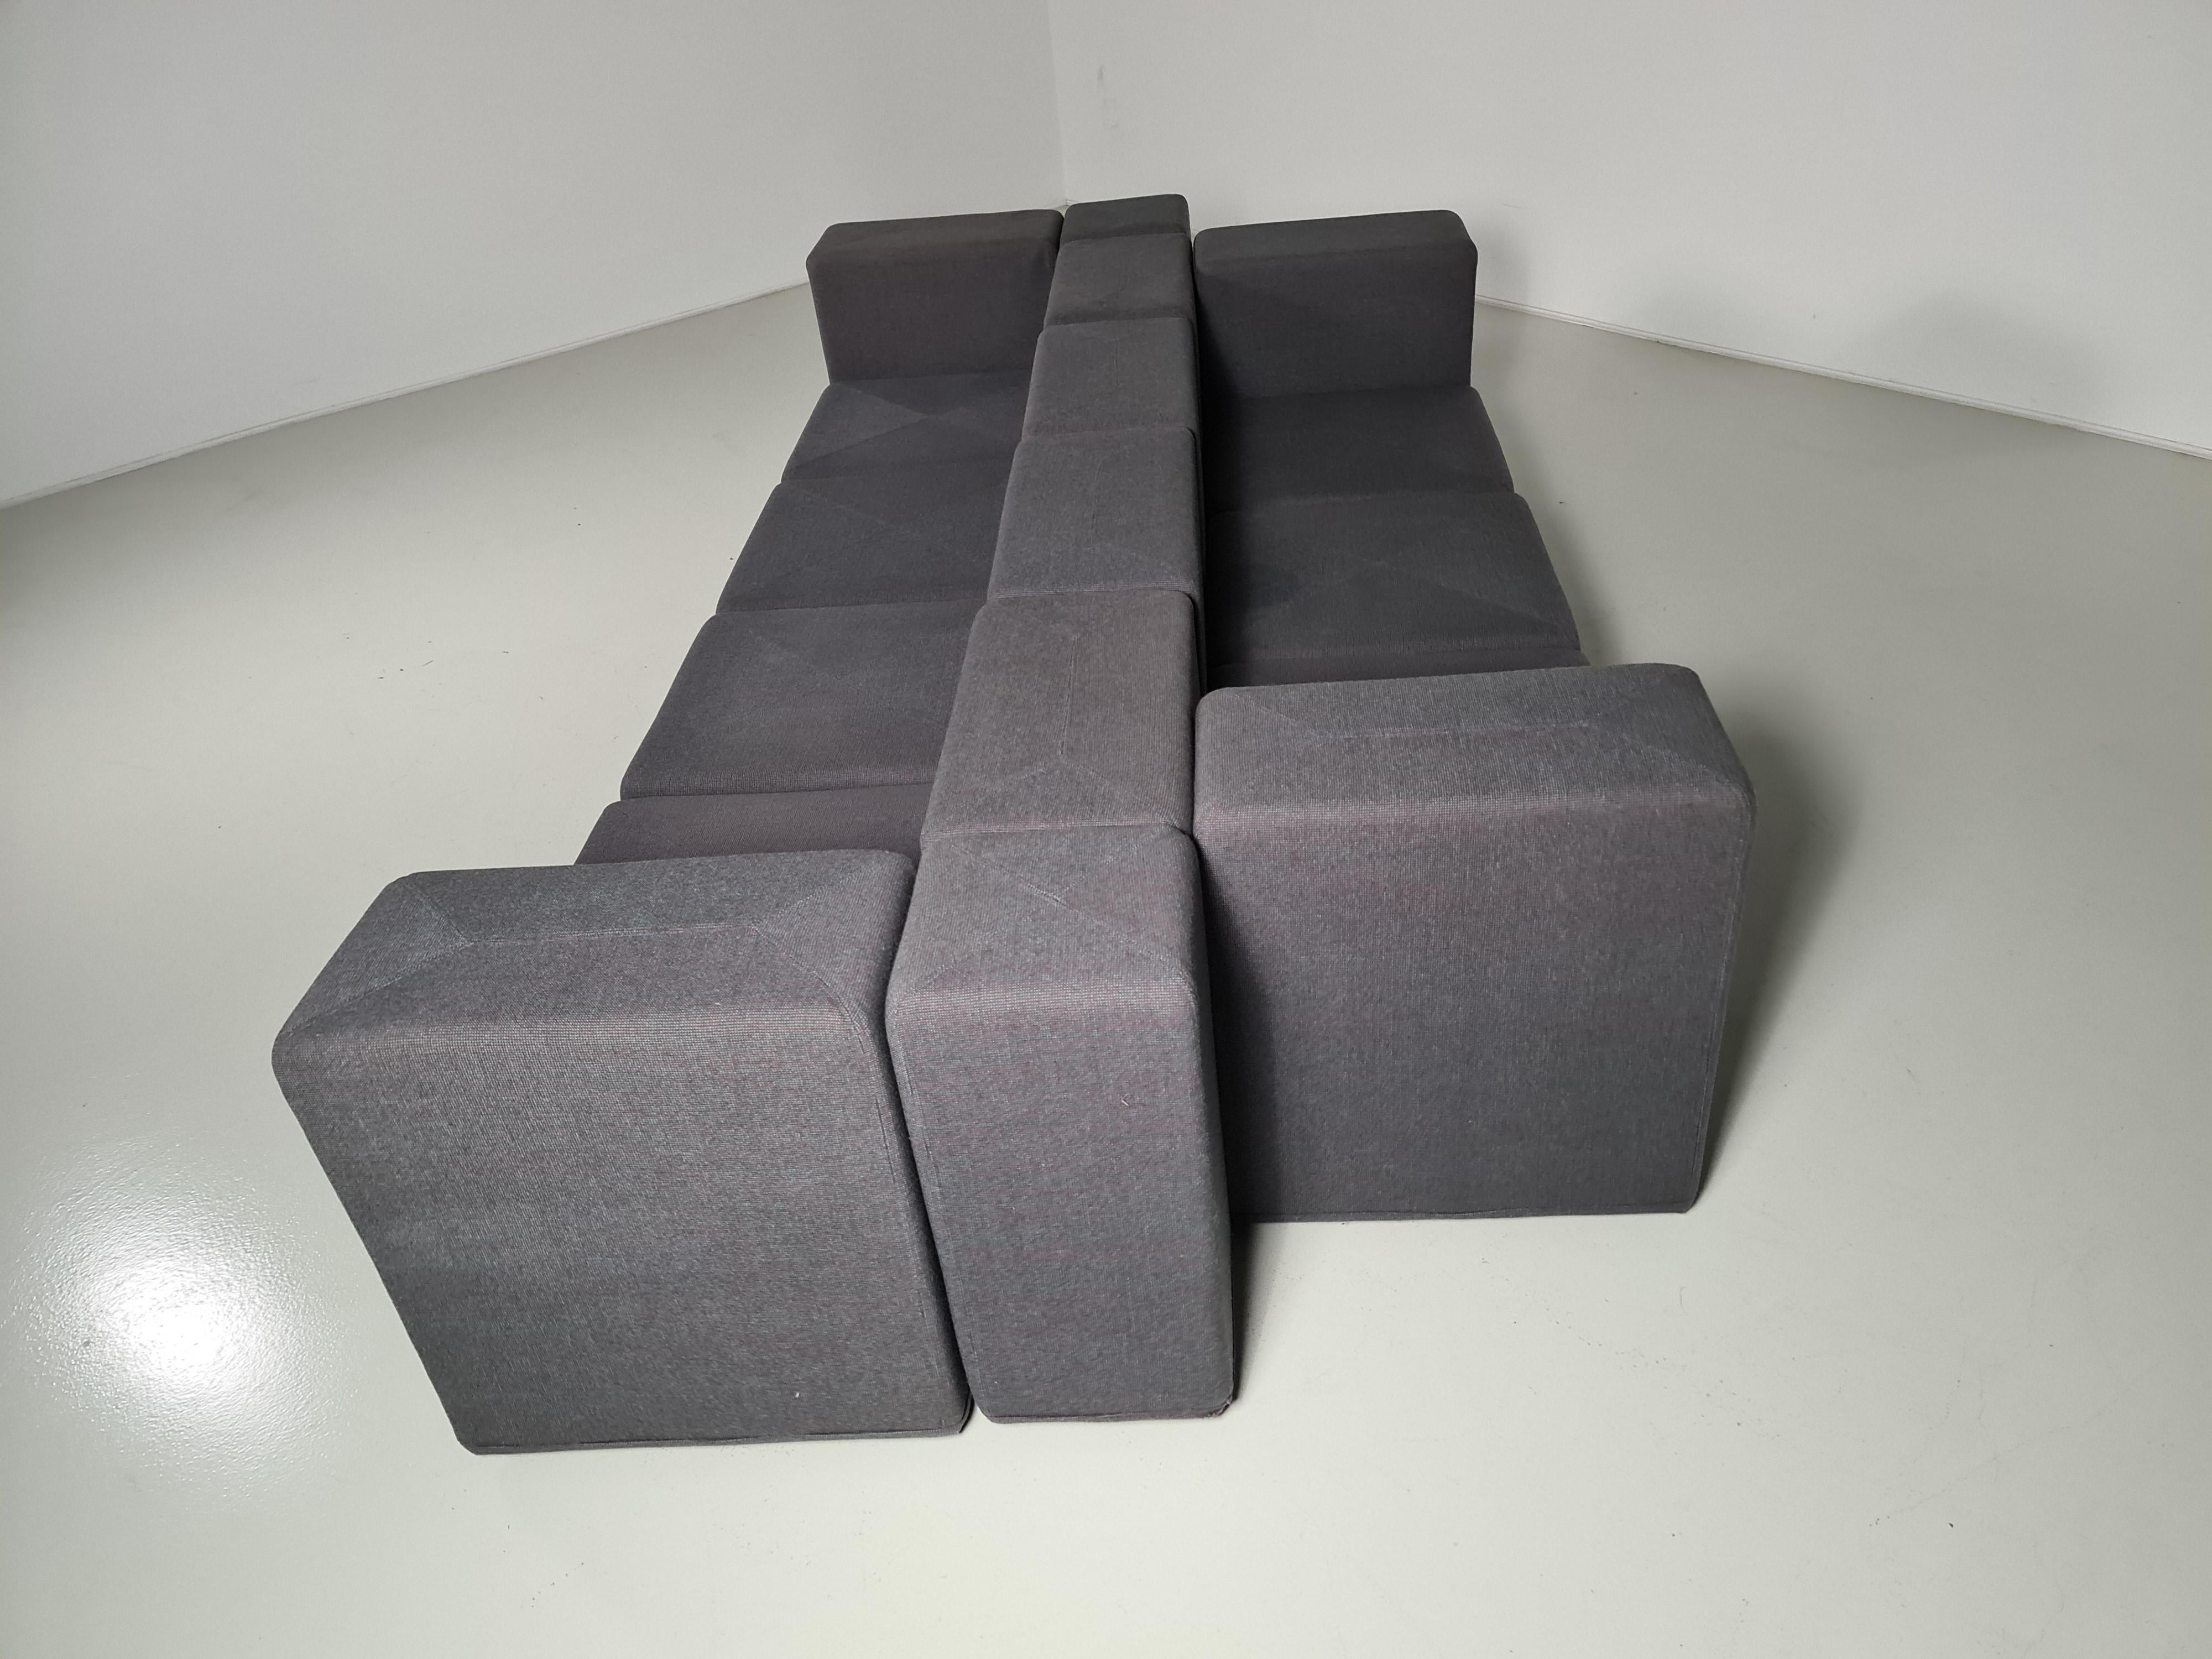 Modulares Sistema 61-Sofa von Giancarlo Piretti fr Anonima Castelli, 1970er Jahre (Ende des 20. Jahrhunderts) im Angebot